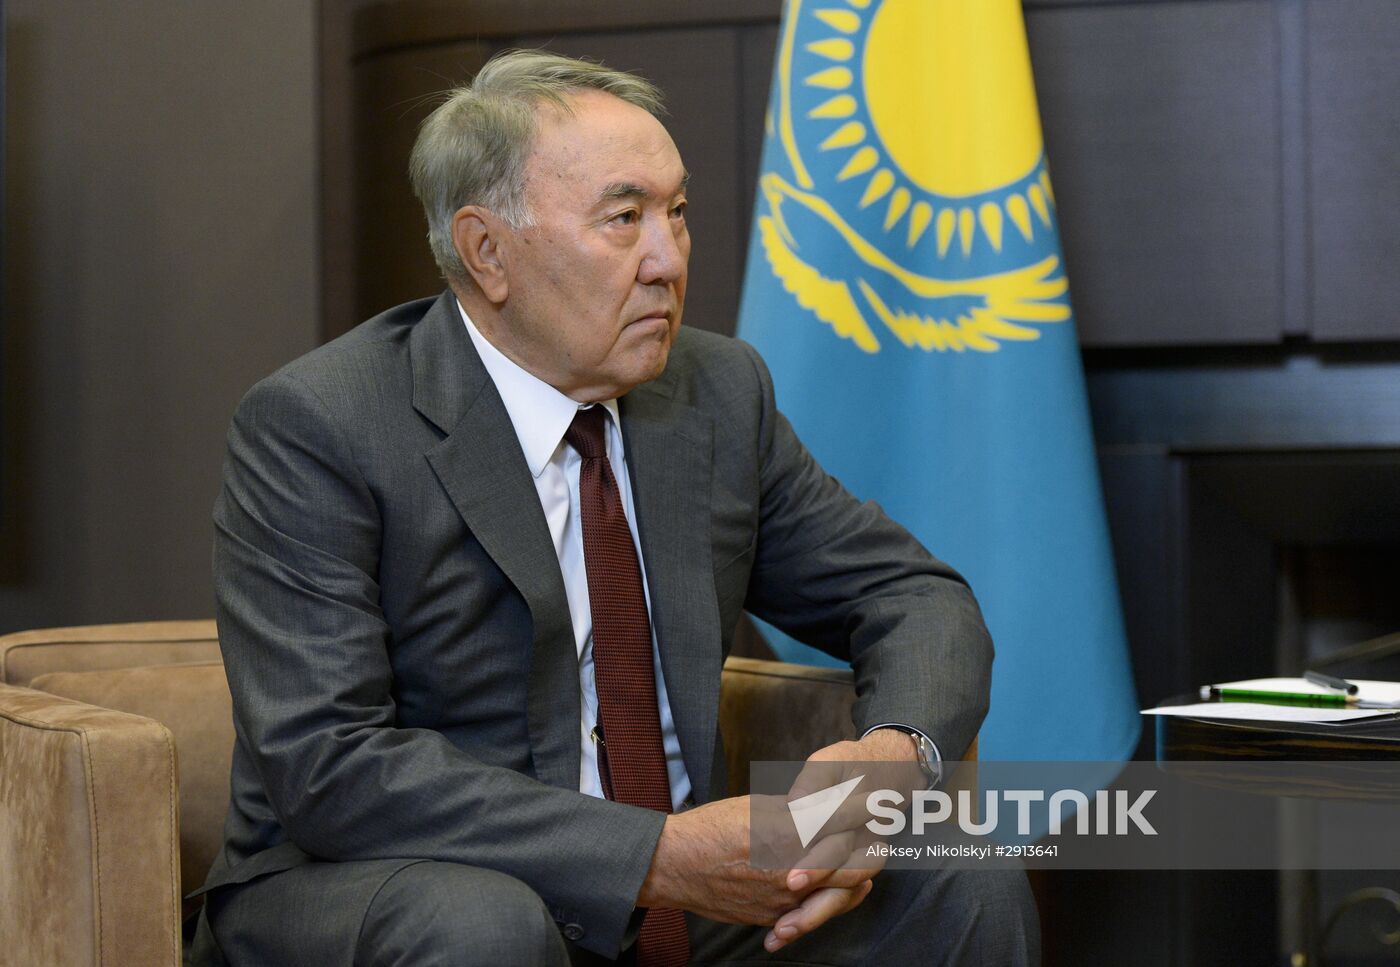 Russian President Vladimir Putin meets with President of Kazakhstan Nursultan Nazarbayev